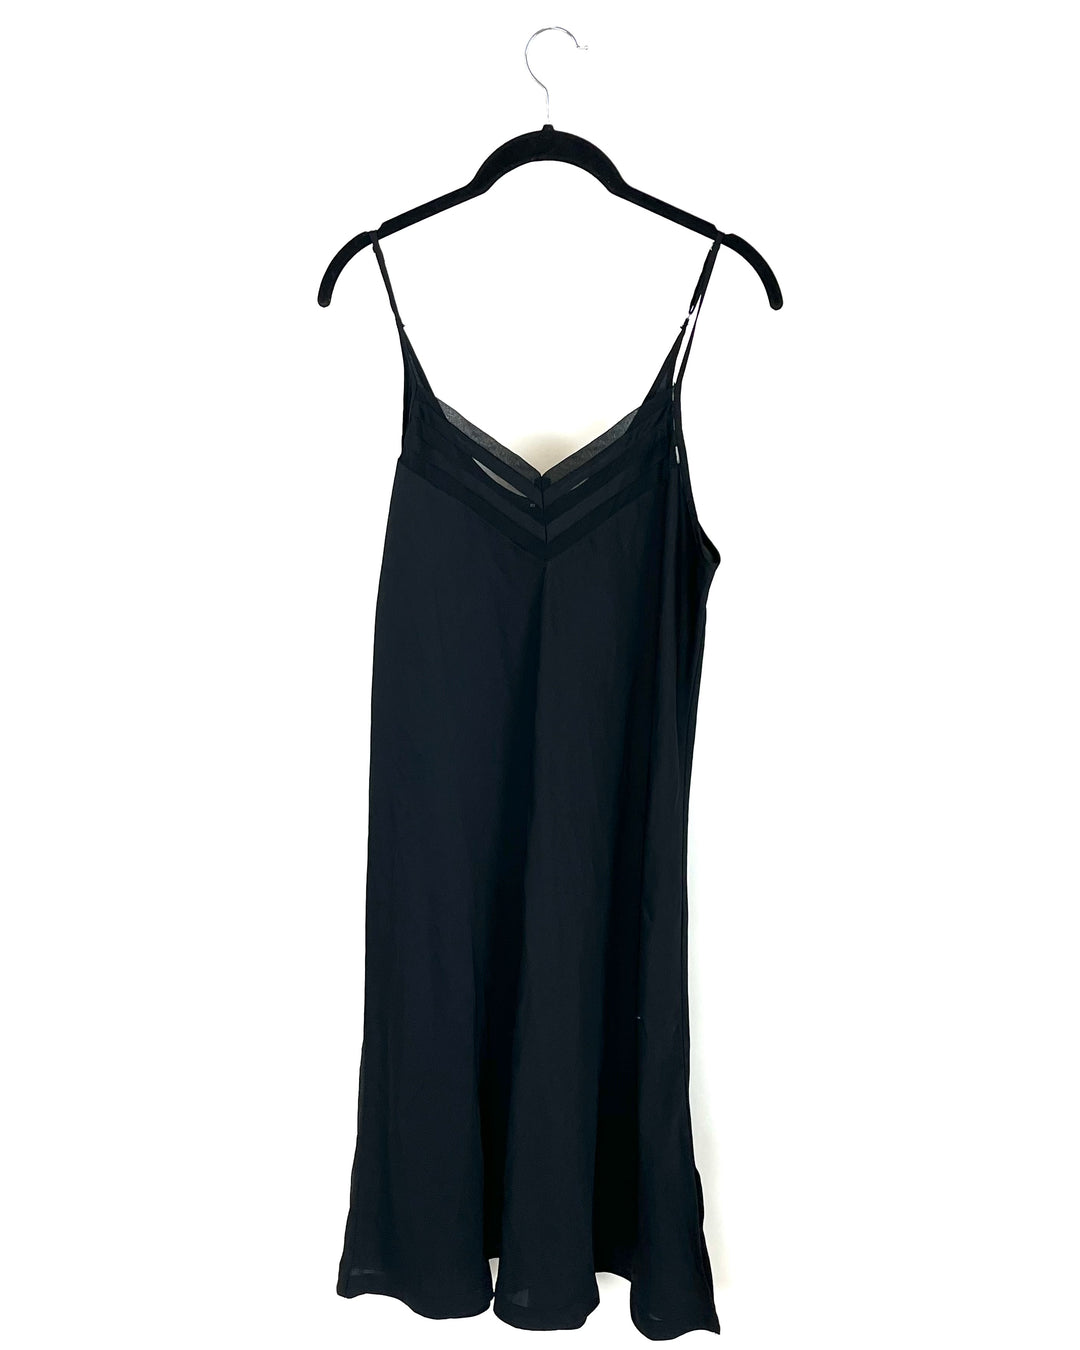 Black Sleep Dress - Size 4/6